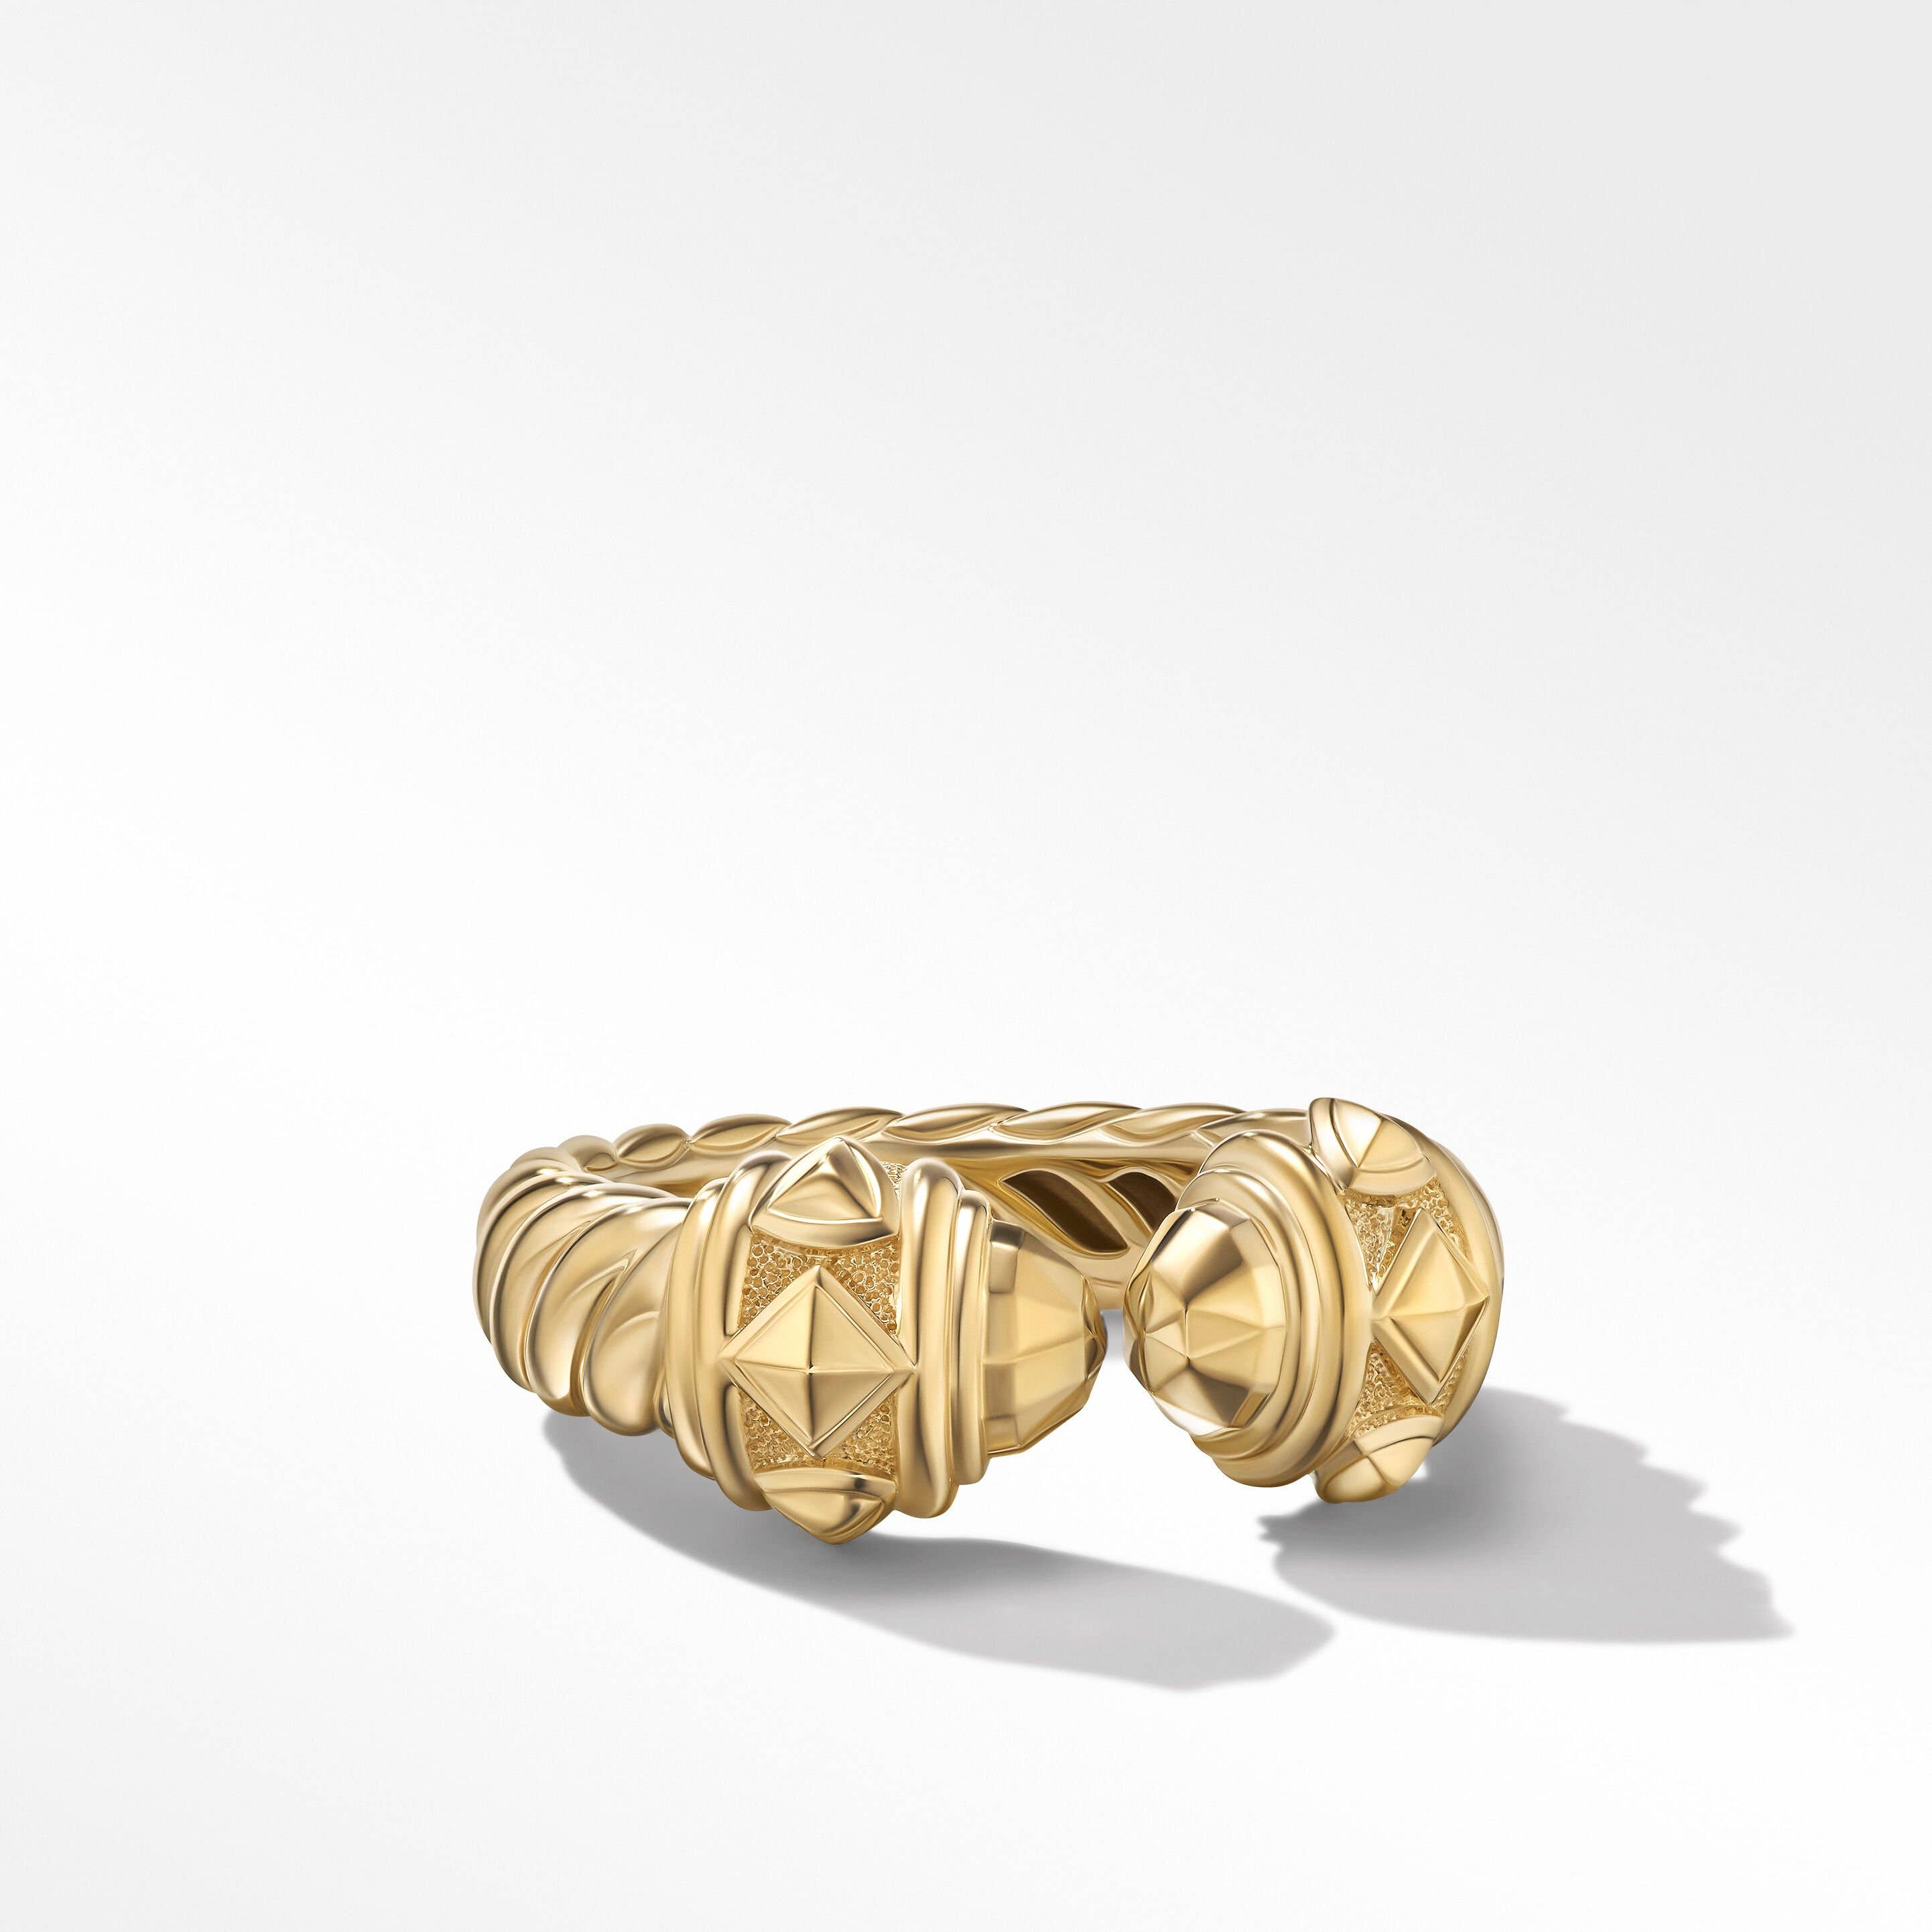 Renaissance® Ring in 18K Yellow Gold